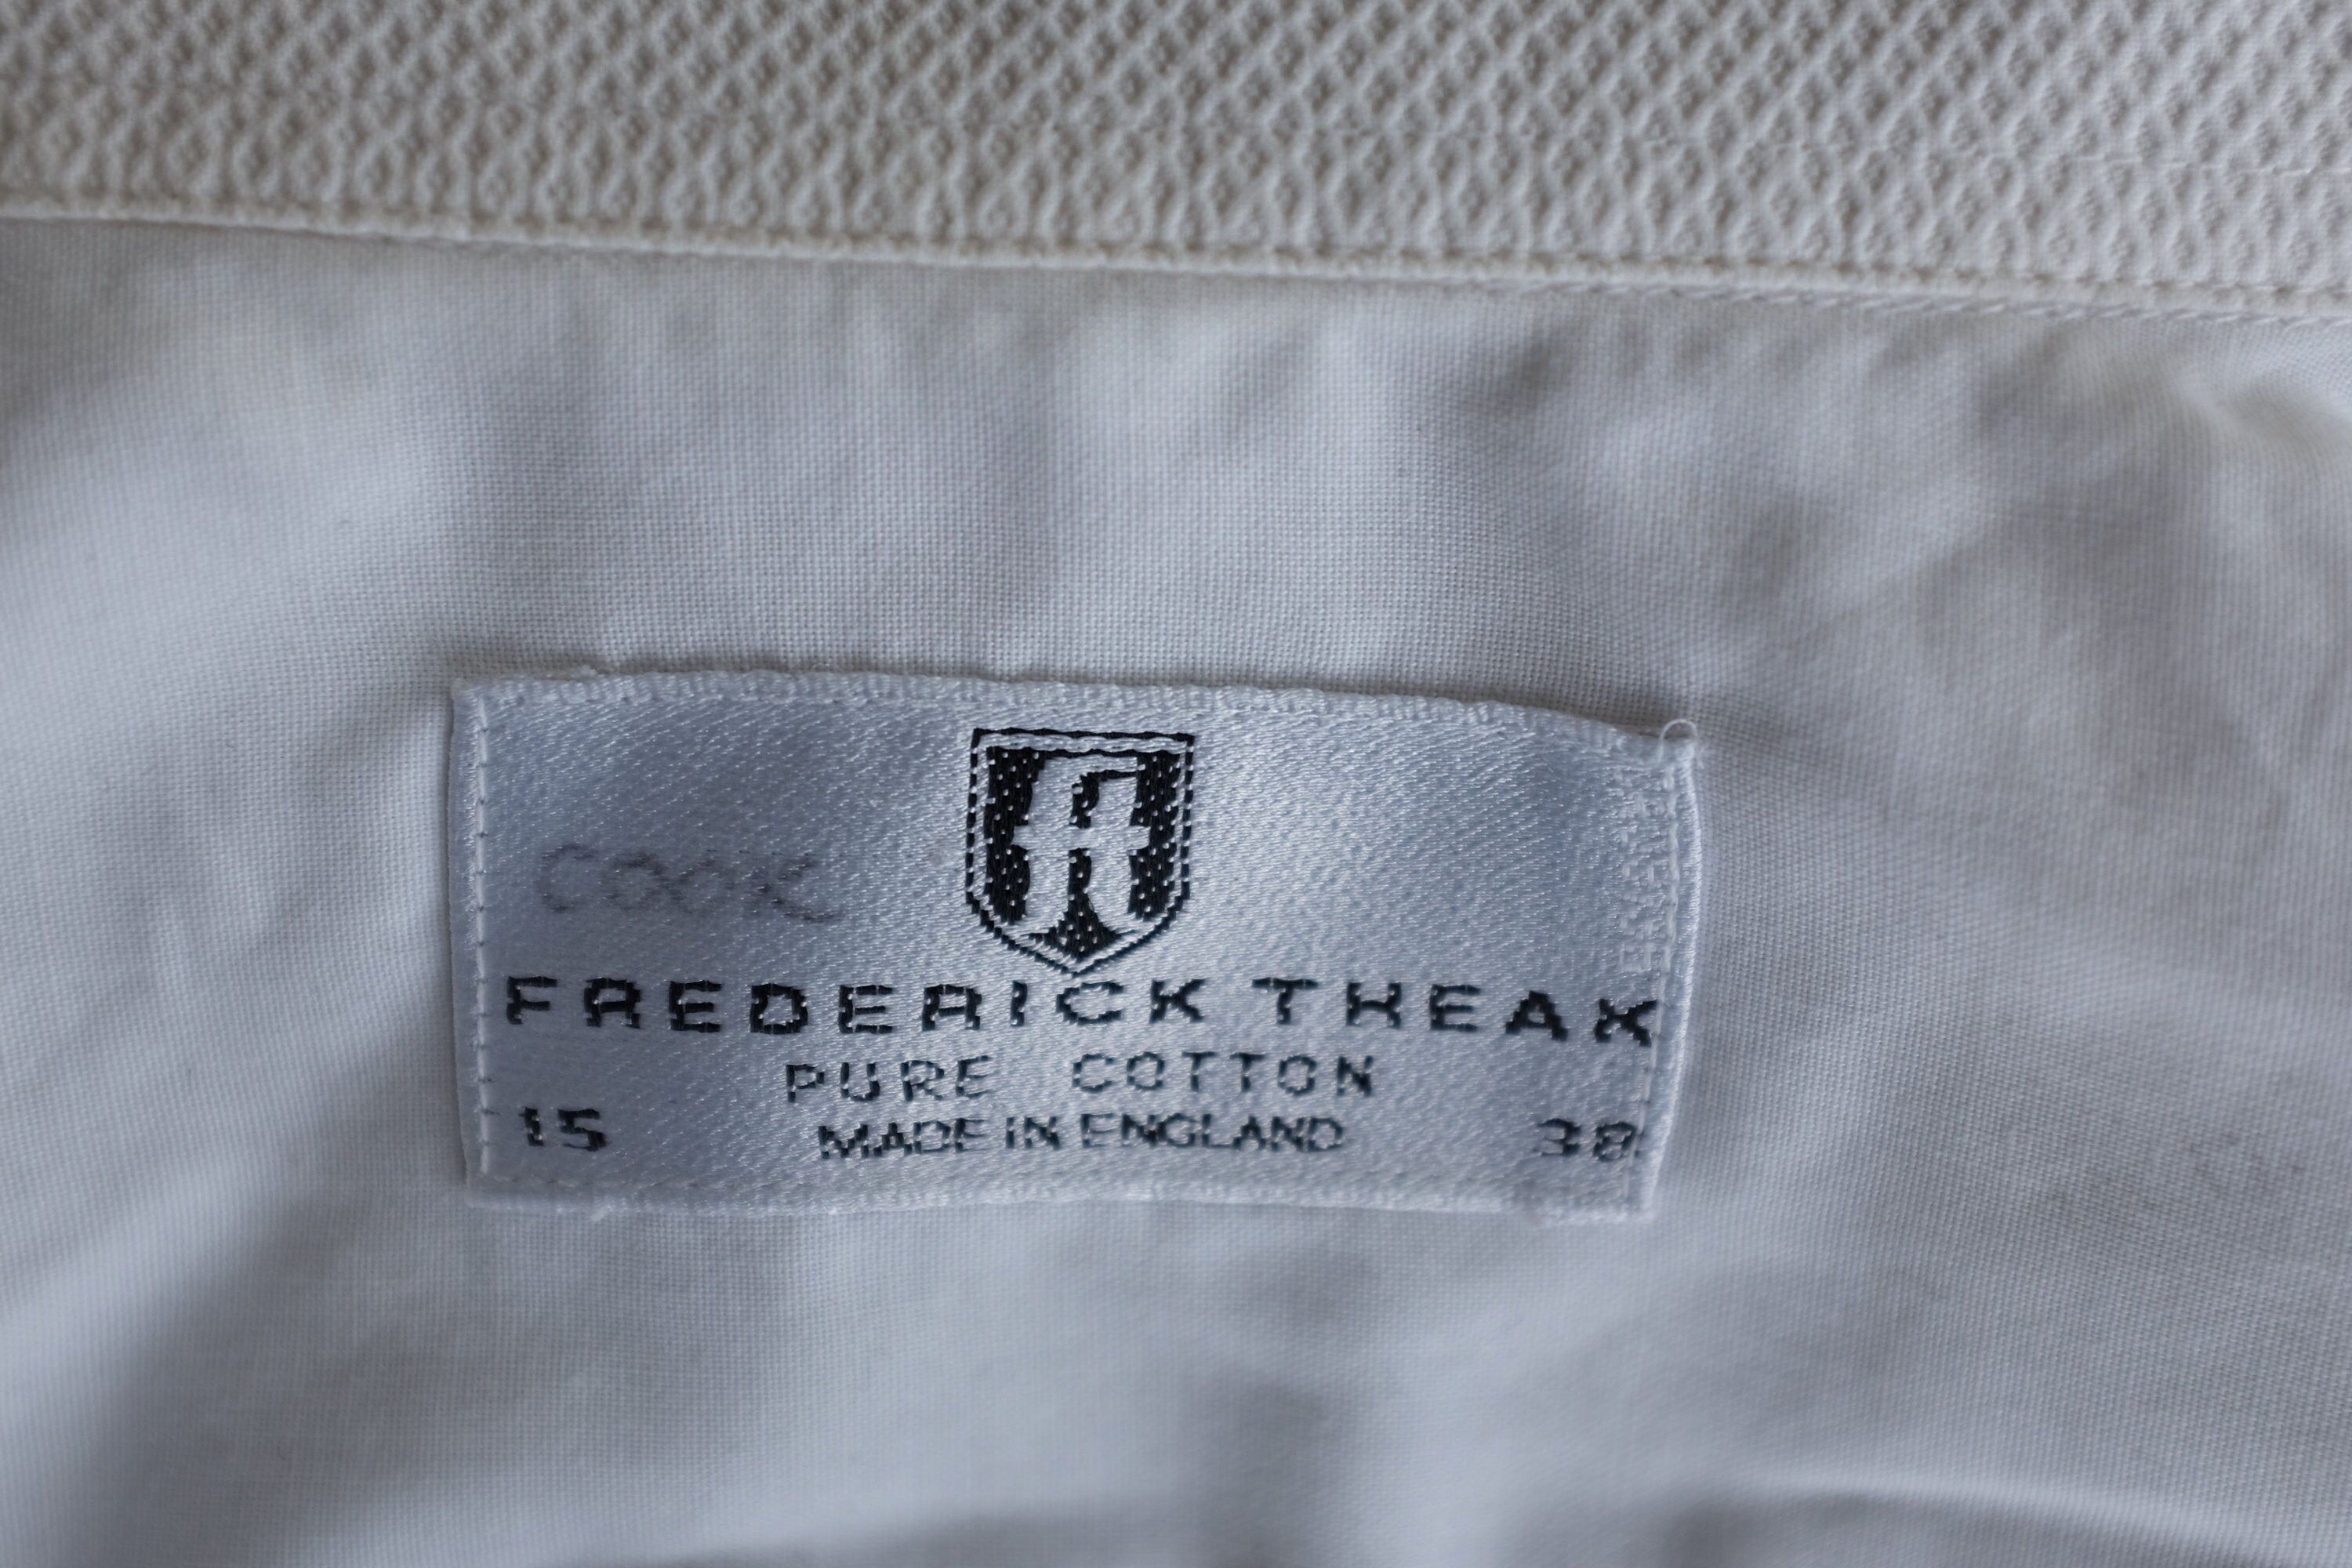 High Quality English White Shirt by Frederick Theak | Etsy